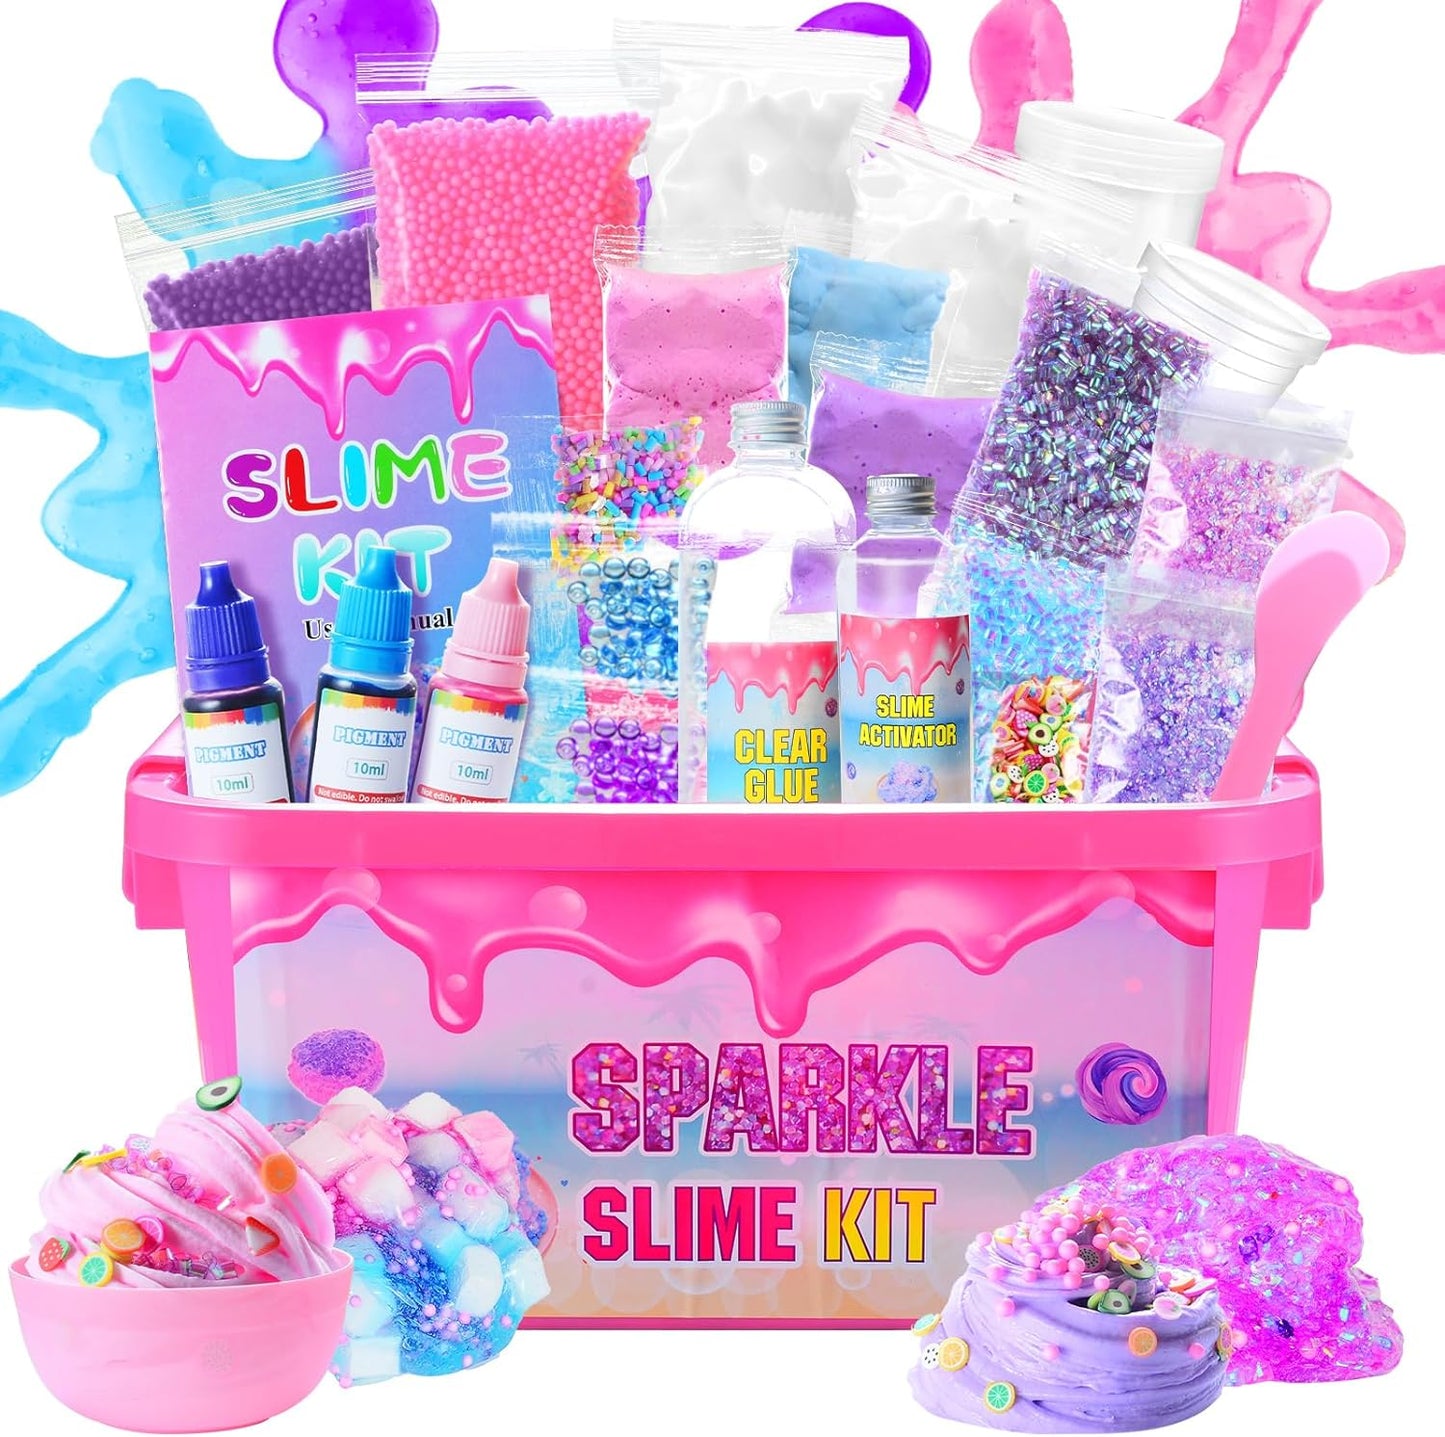 Slime Kit Confetti Slime, Glimmer Crunchy Slime, Foam Slime, Jelly Cubes Slime, Stress Relief Toys, Party Favors for Kids, for Girl Boys 6 7 8 9 10 11 12